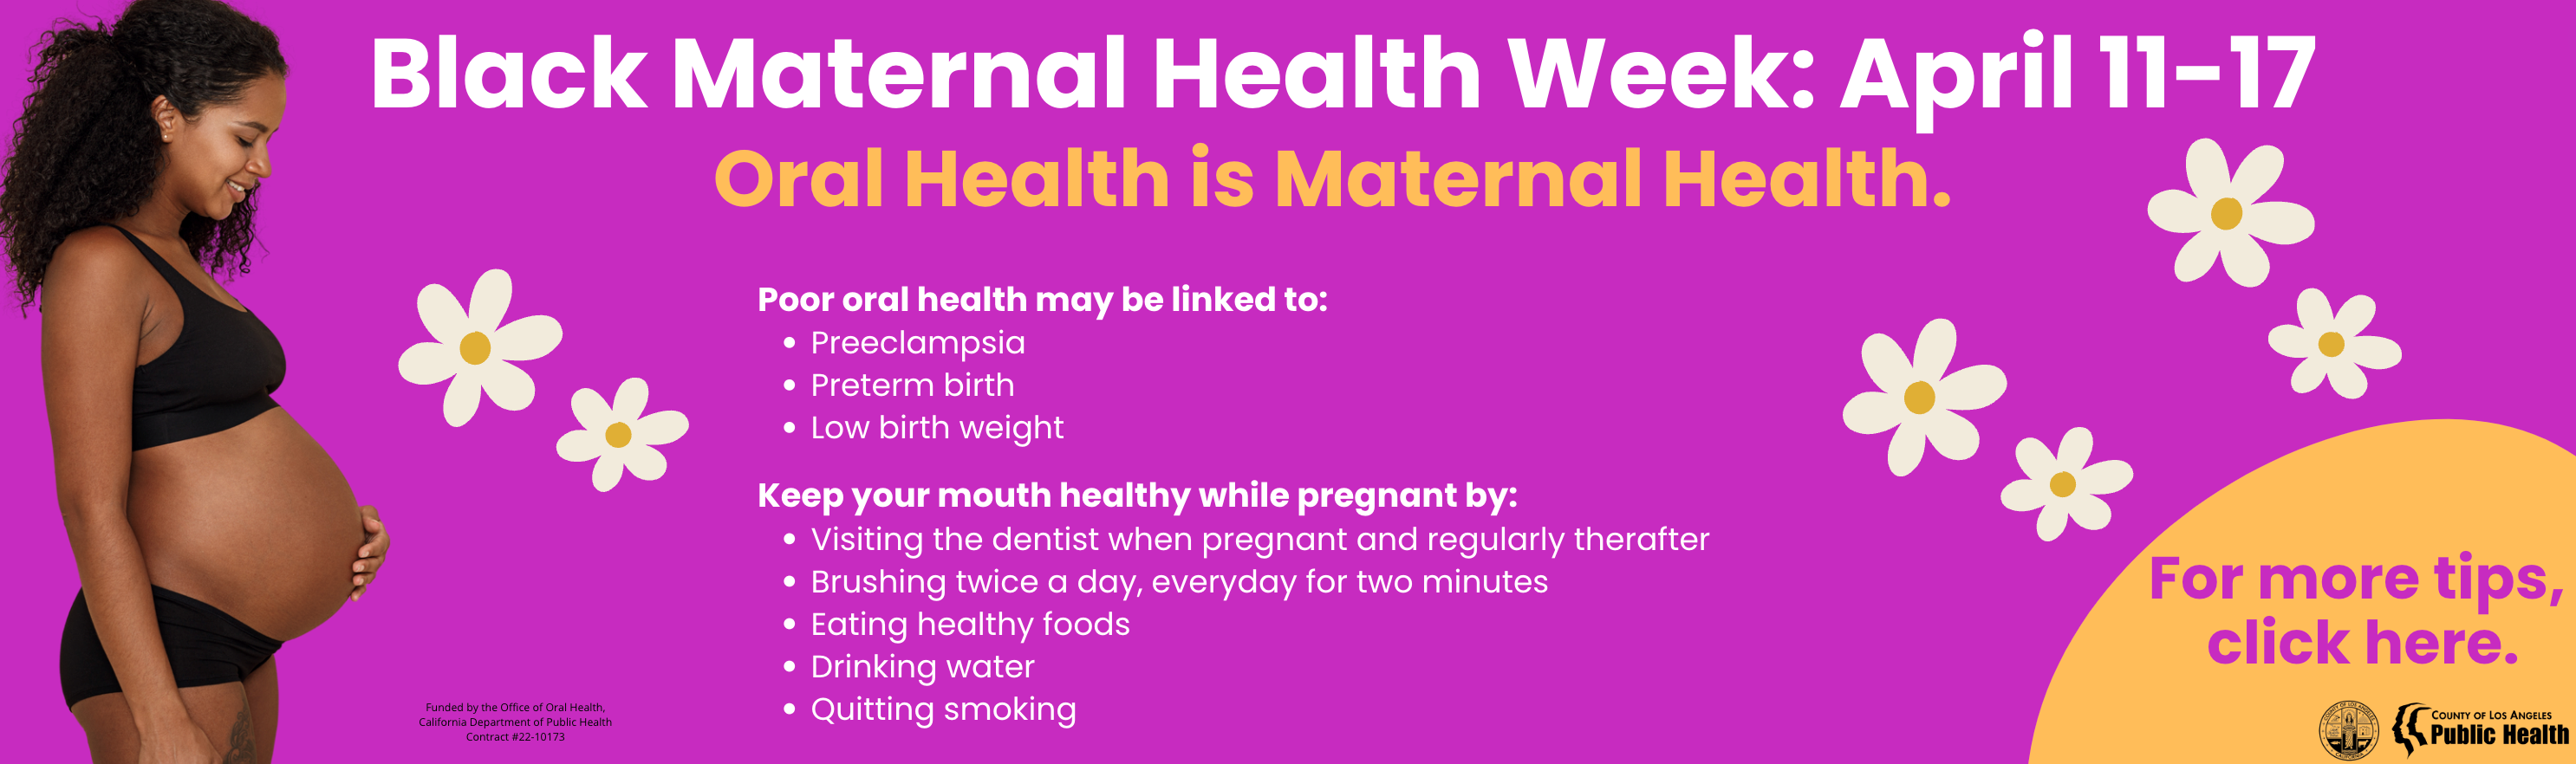 Black Maternal Health Week